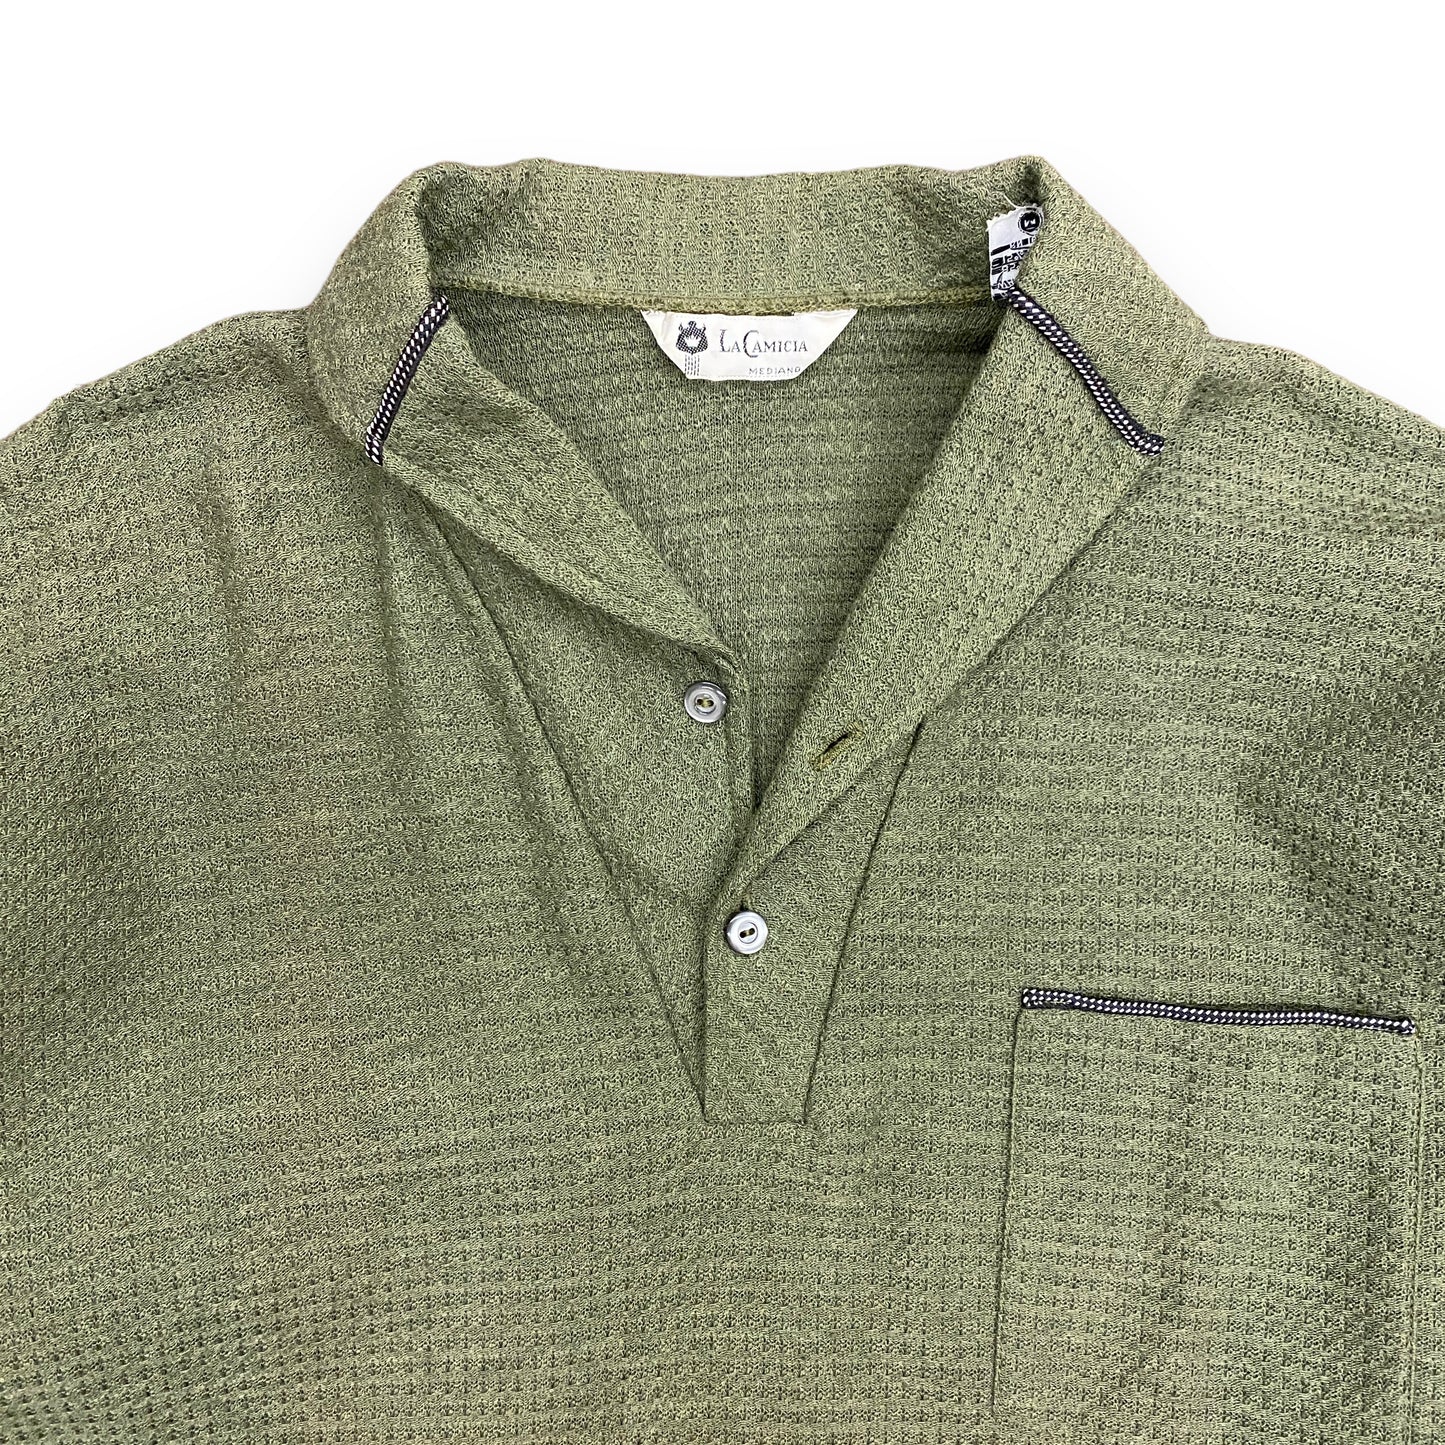 1970s Green Collared Long Sleeve Knitwear Shirt - Size Medium